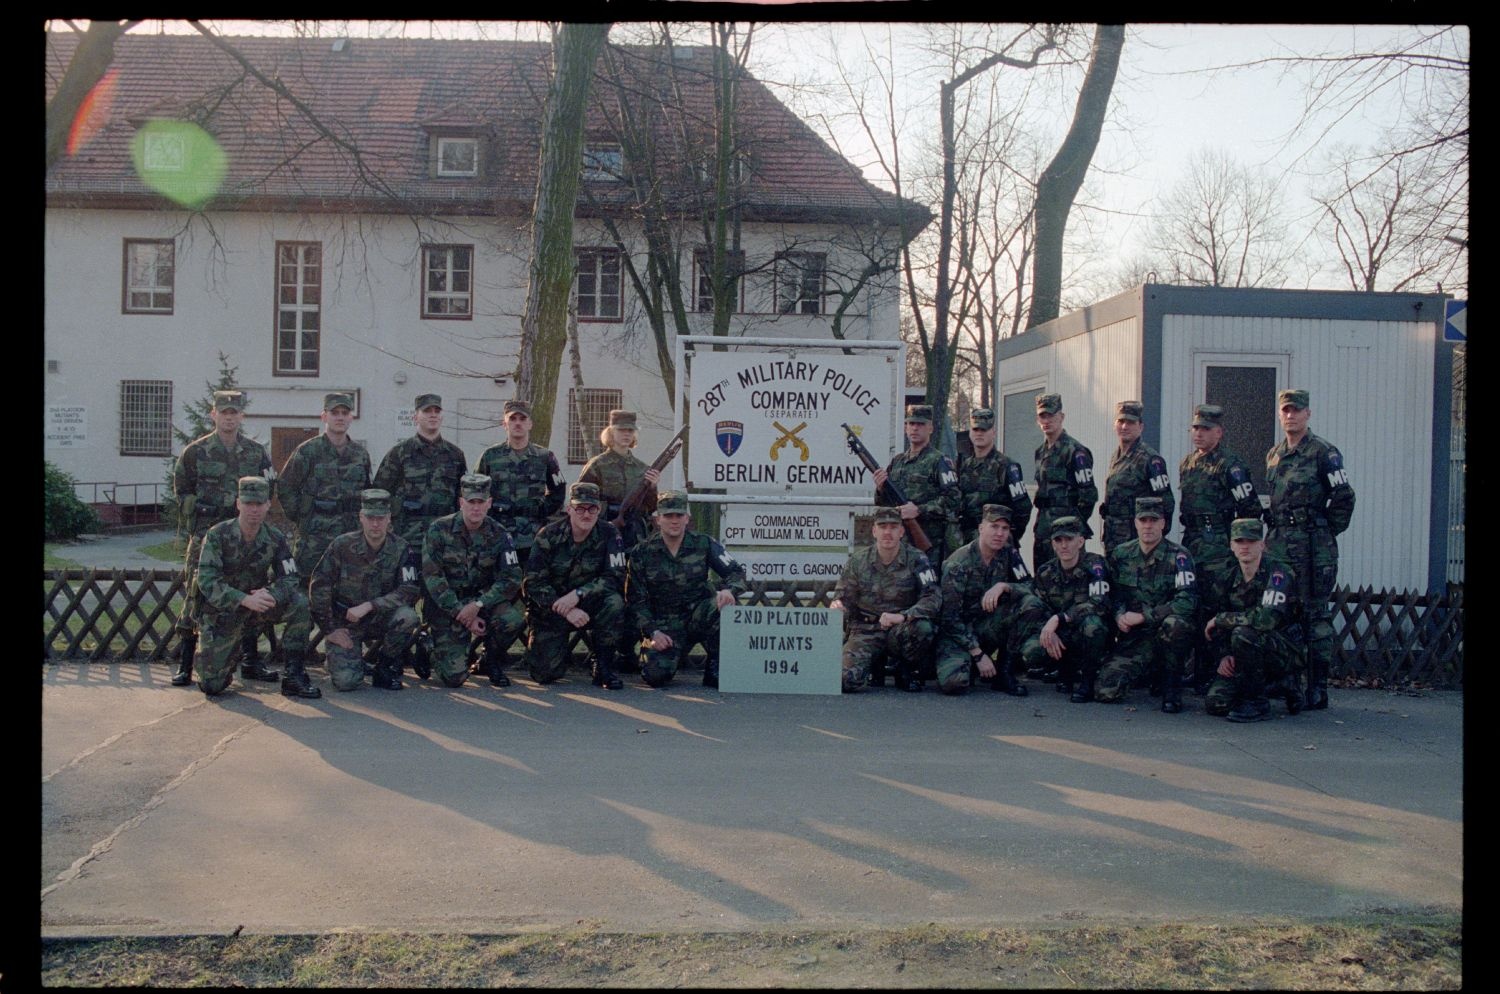 Fotografie: 287th Military Police Company der U.S. Army Berlin (AlliiertenMuseum/U.S. Army Photograph Public Domain Mark)